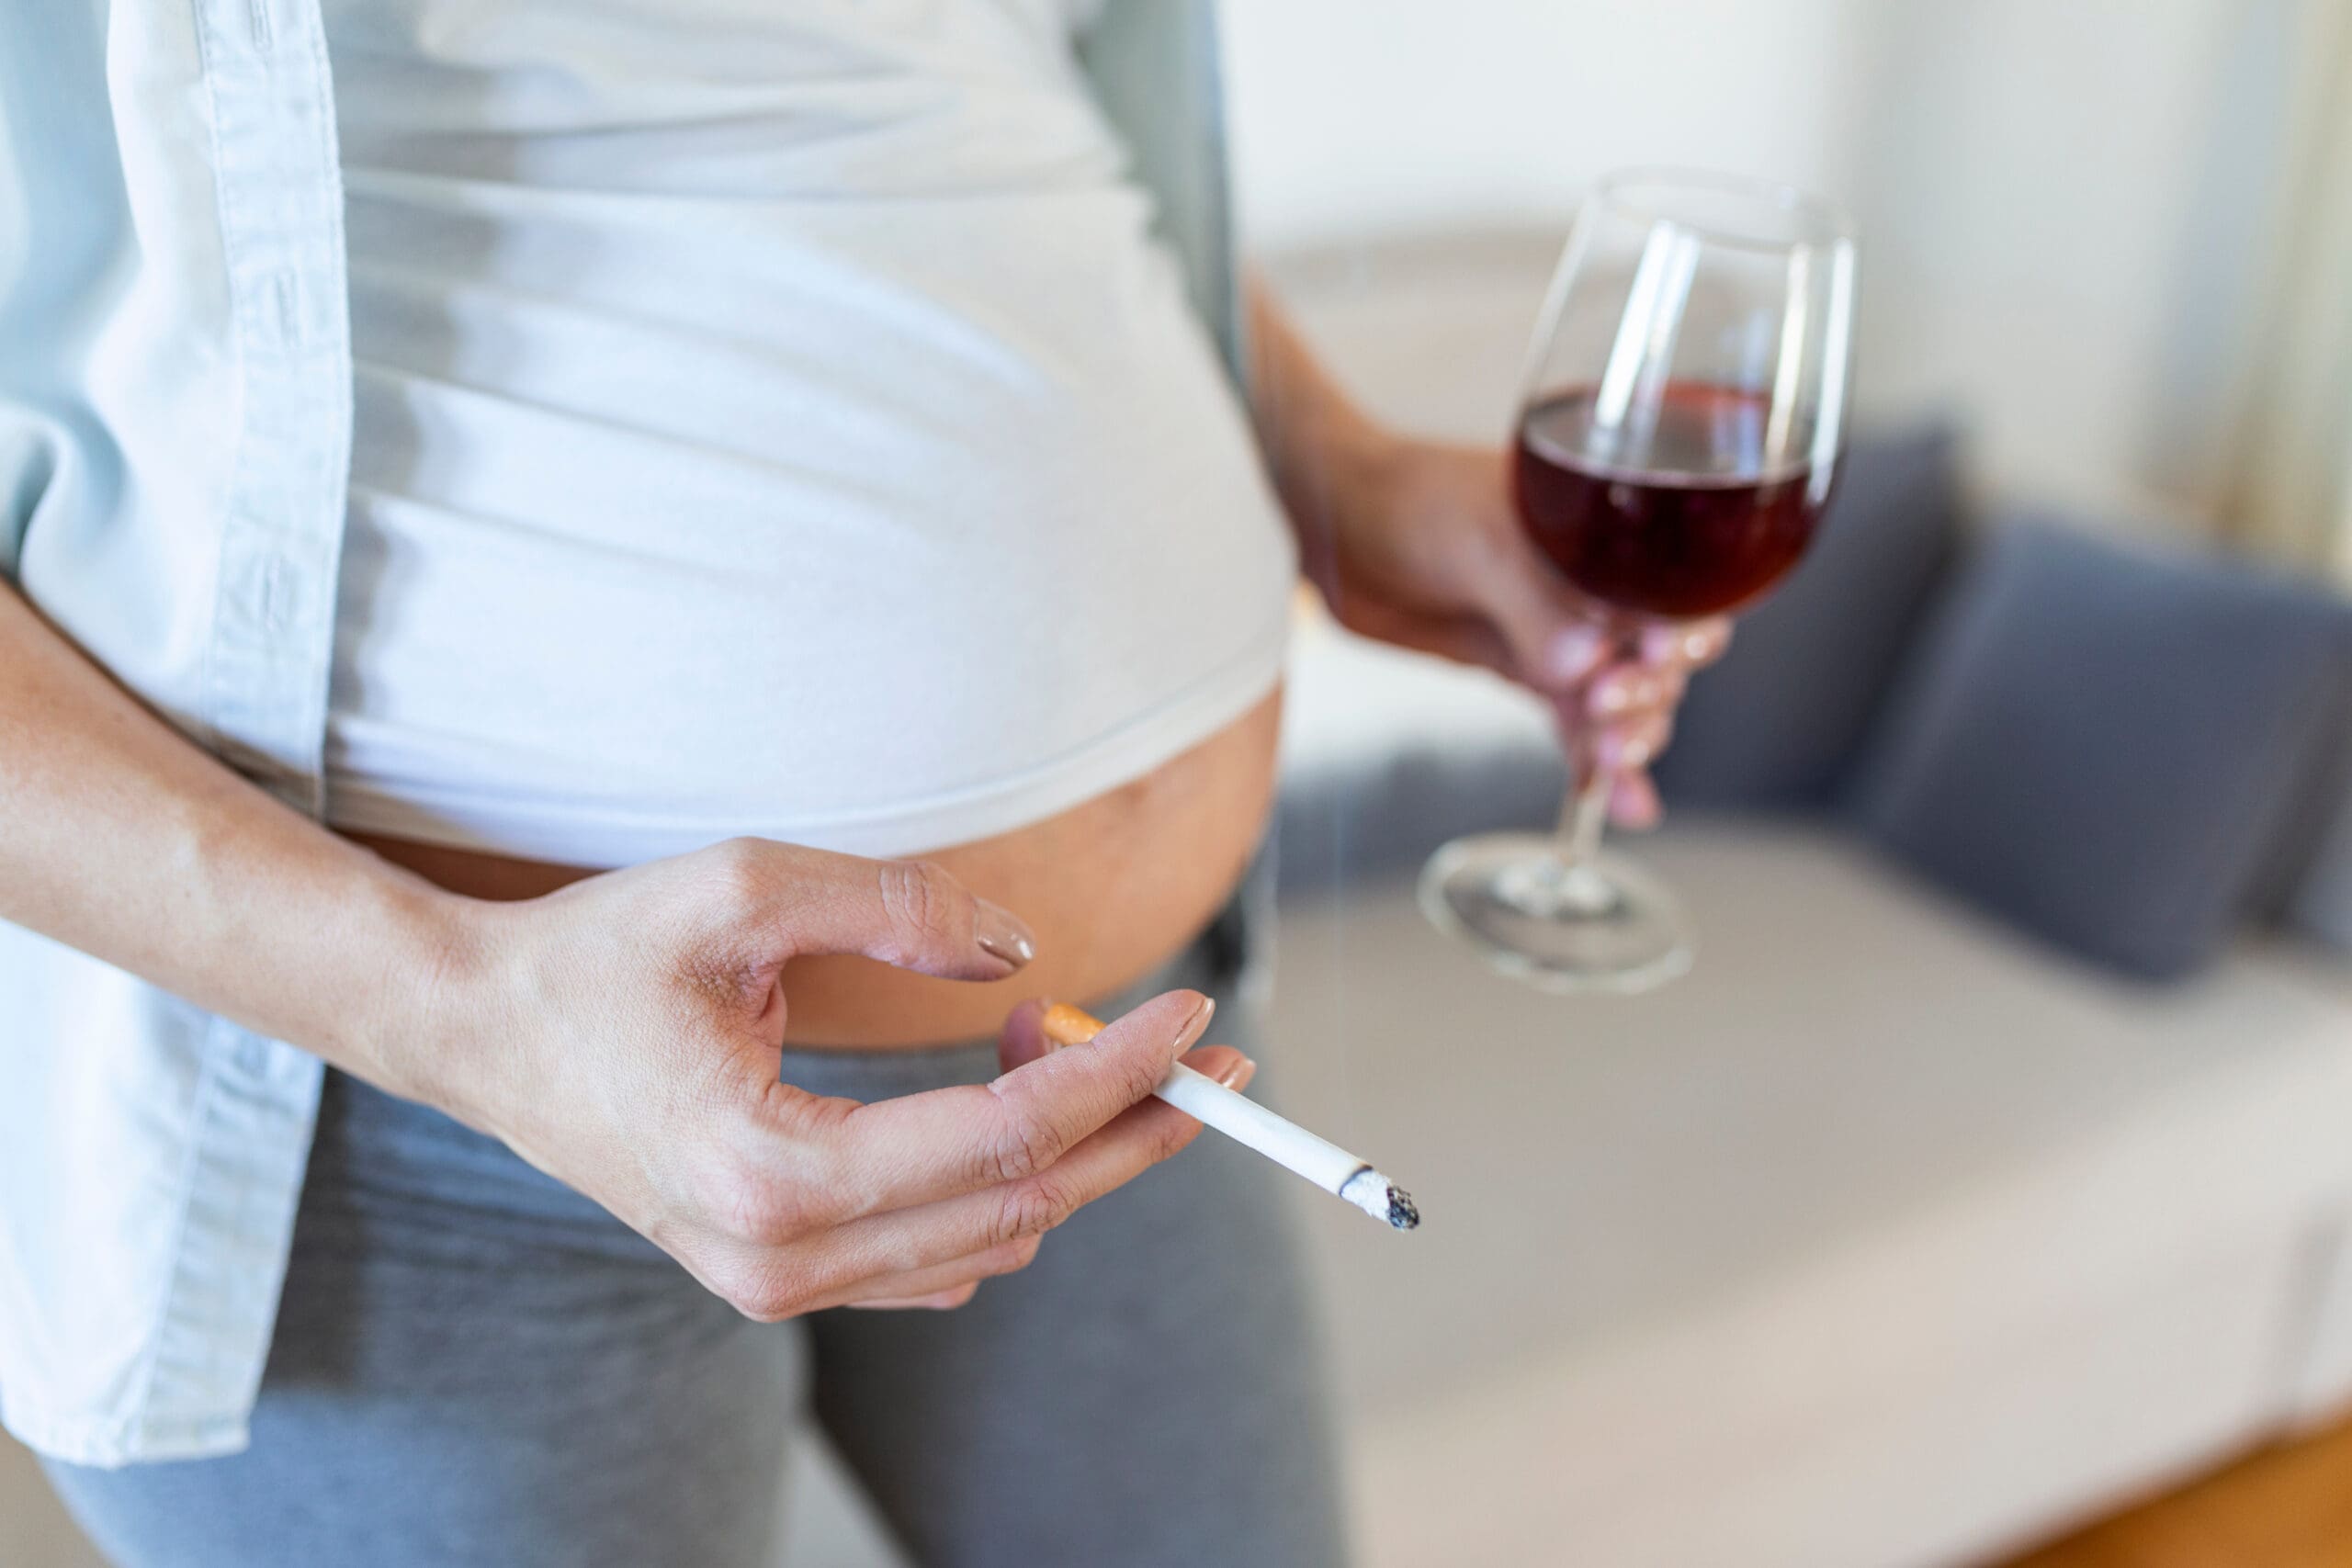 Pregnancy and addiction